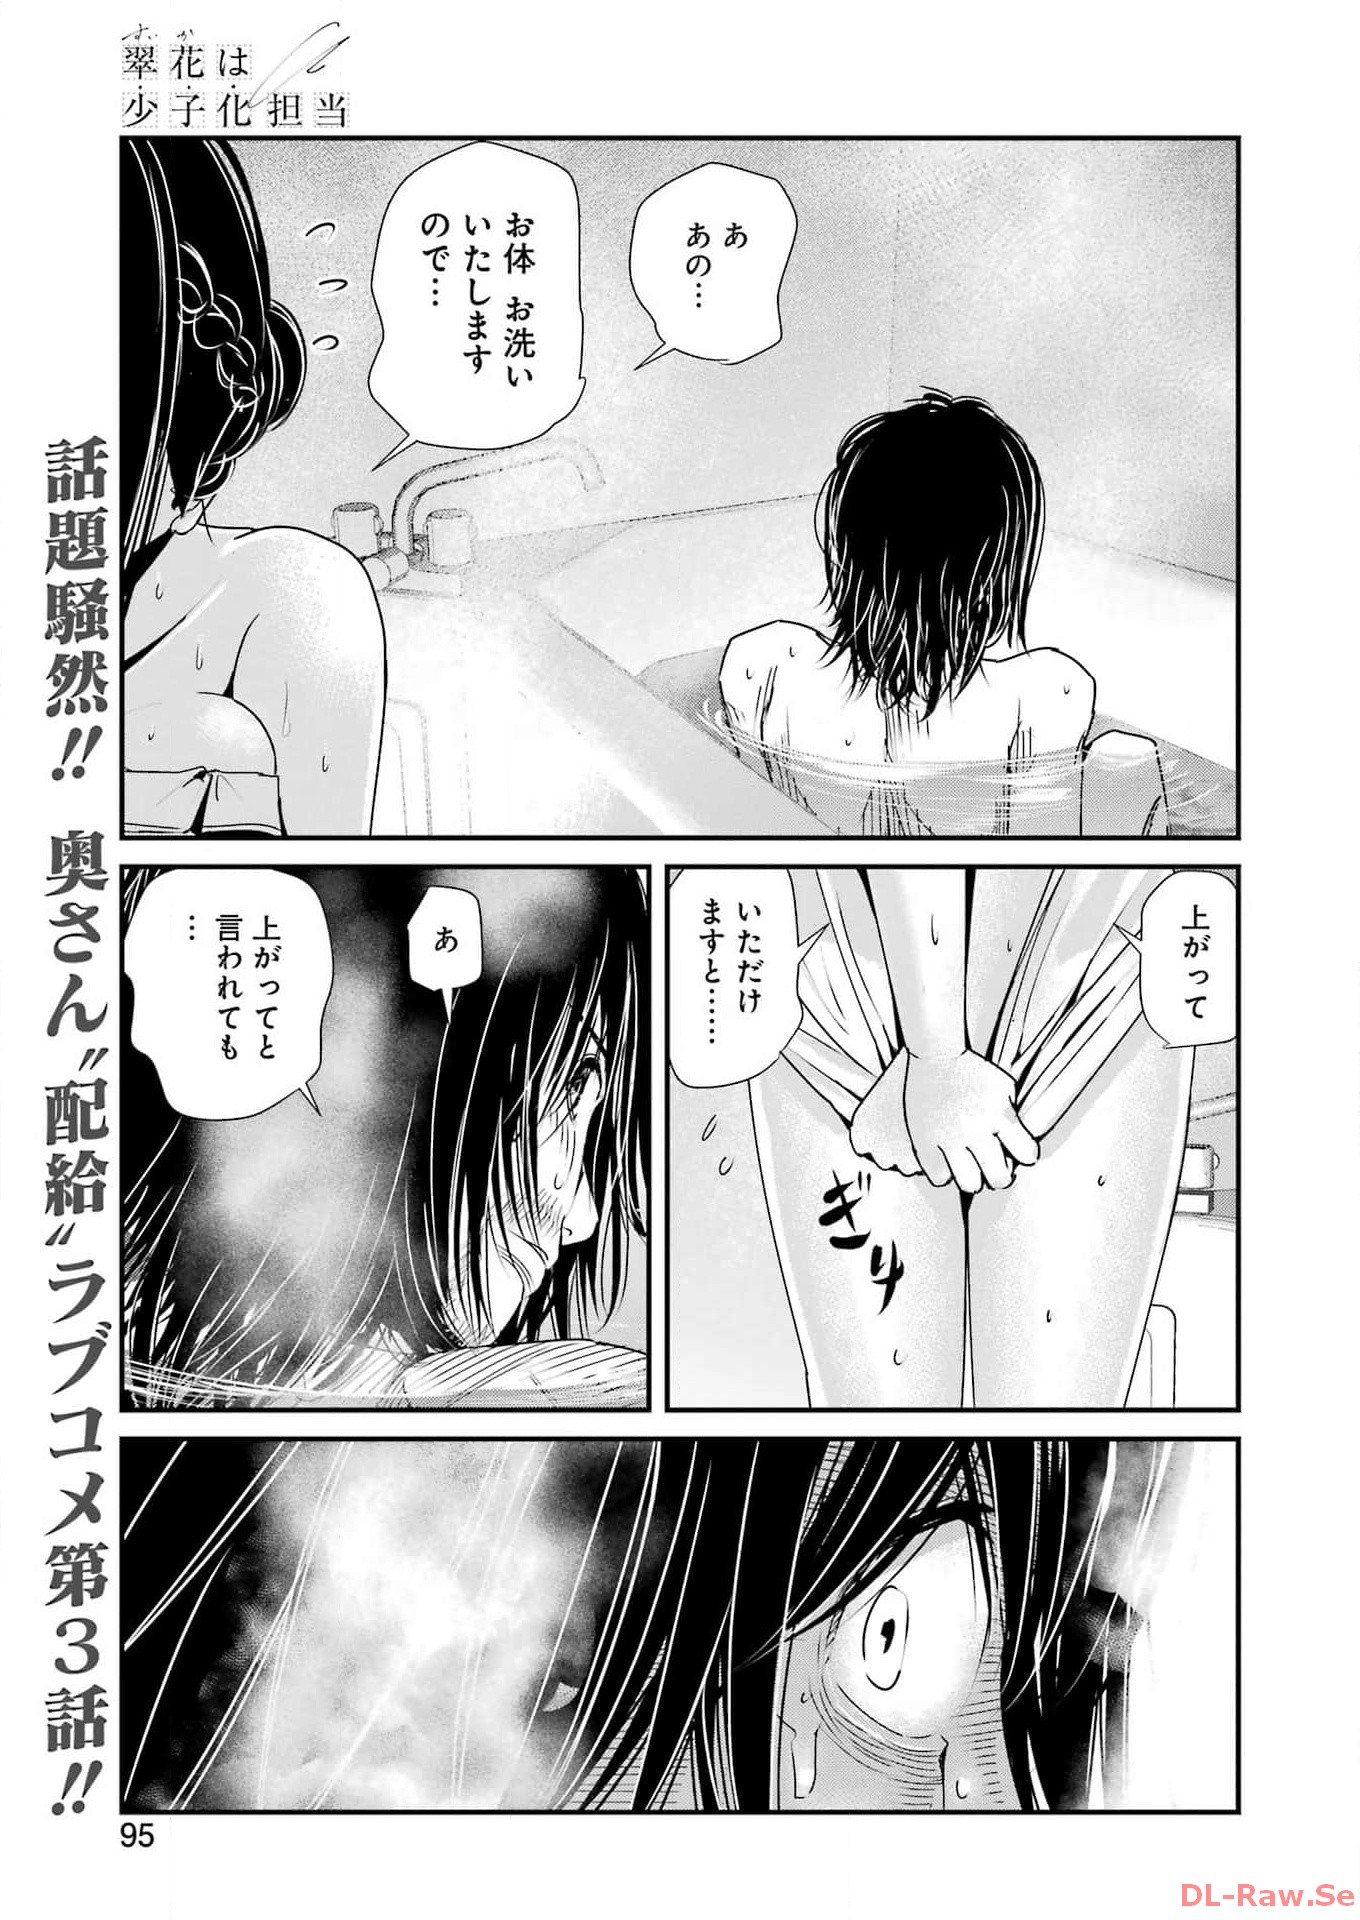 Suika wa Shoushika Tantou - Chapter 3 - Page 1